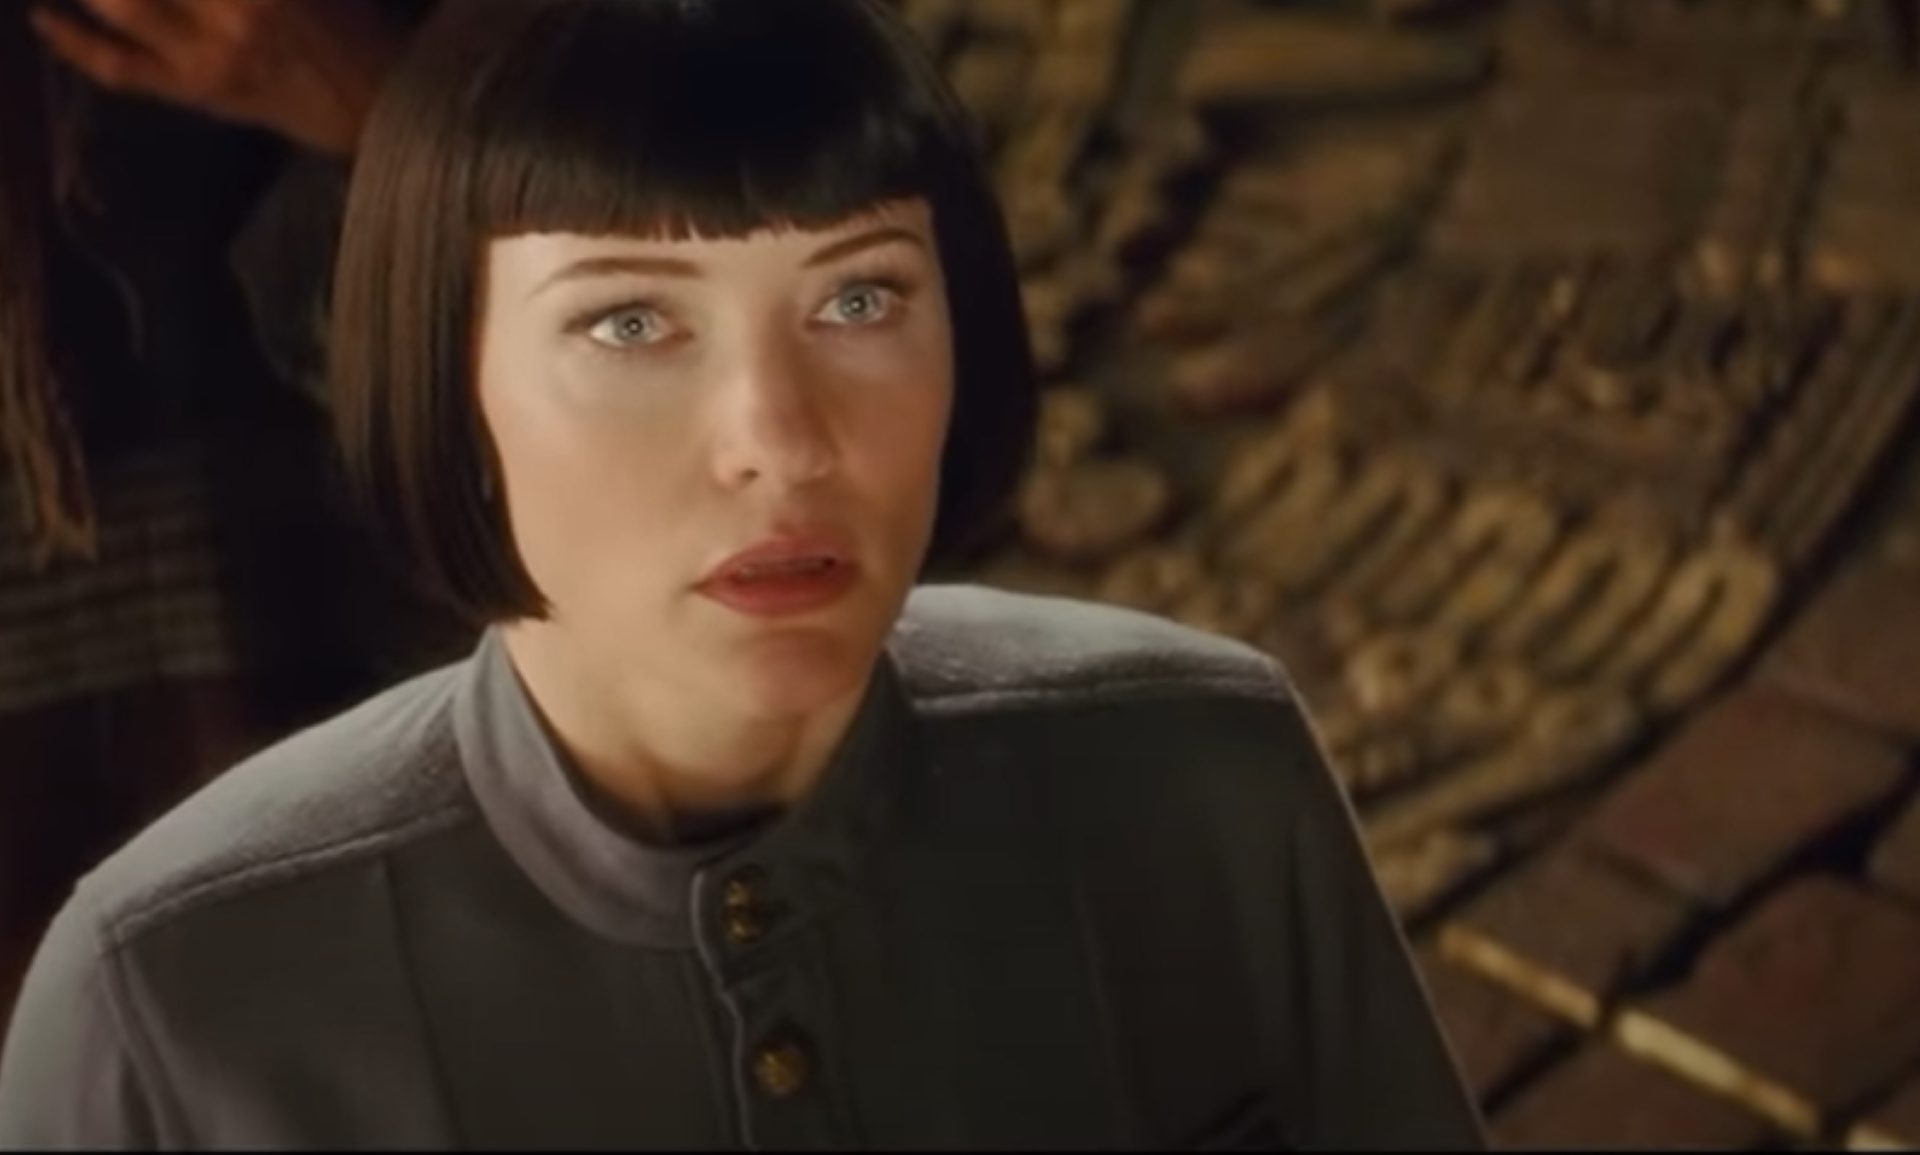 Cate Blanchett: Indiana Jones and the Kingdom of the Crystal Skull